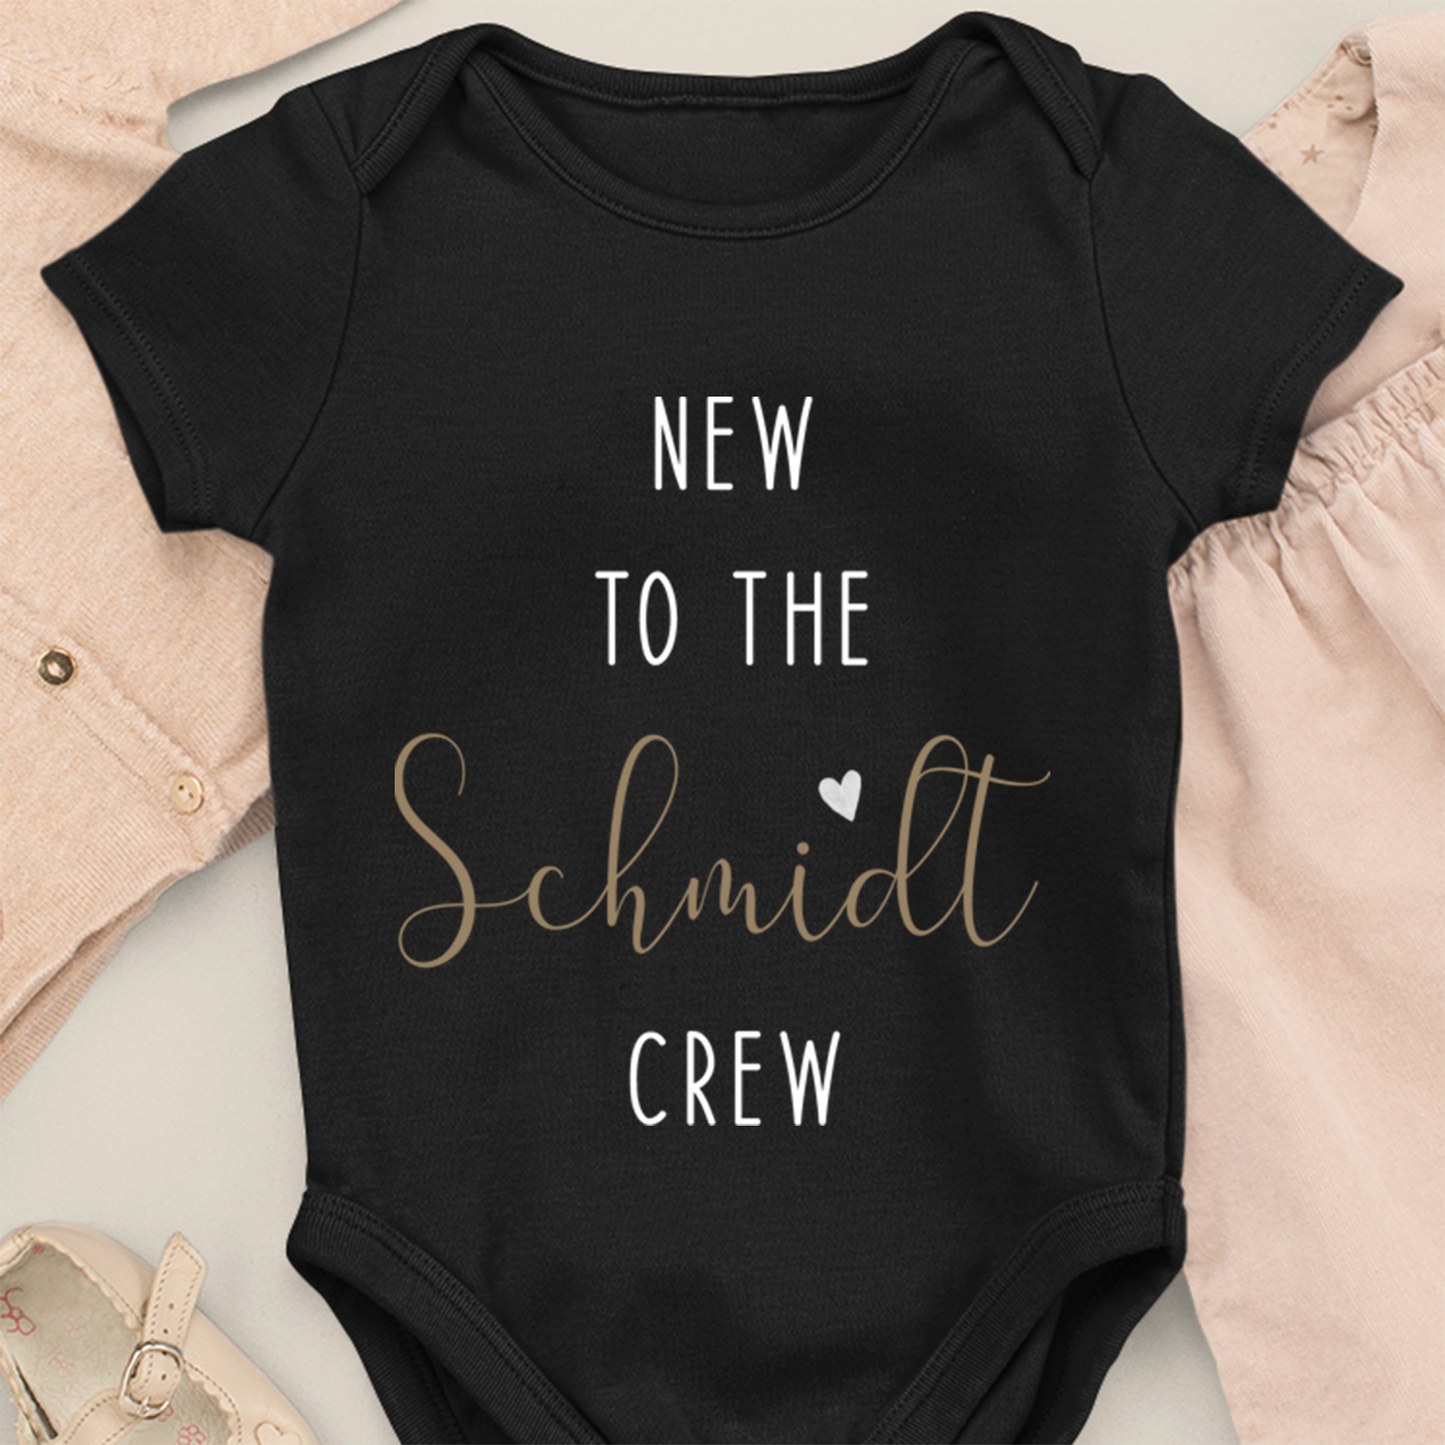 New to the "Familienname" Crew - Body bebé orgánico blanco - nombre personalizado